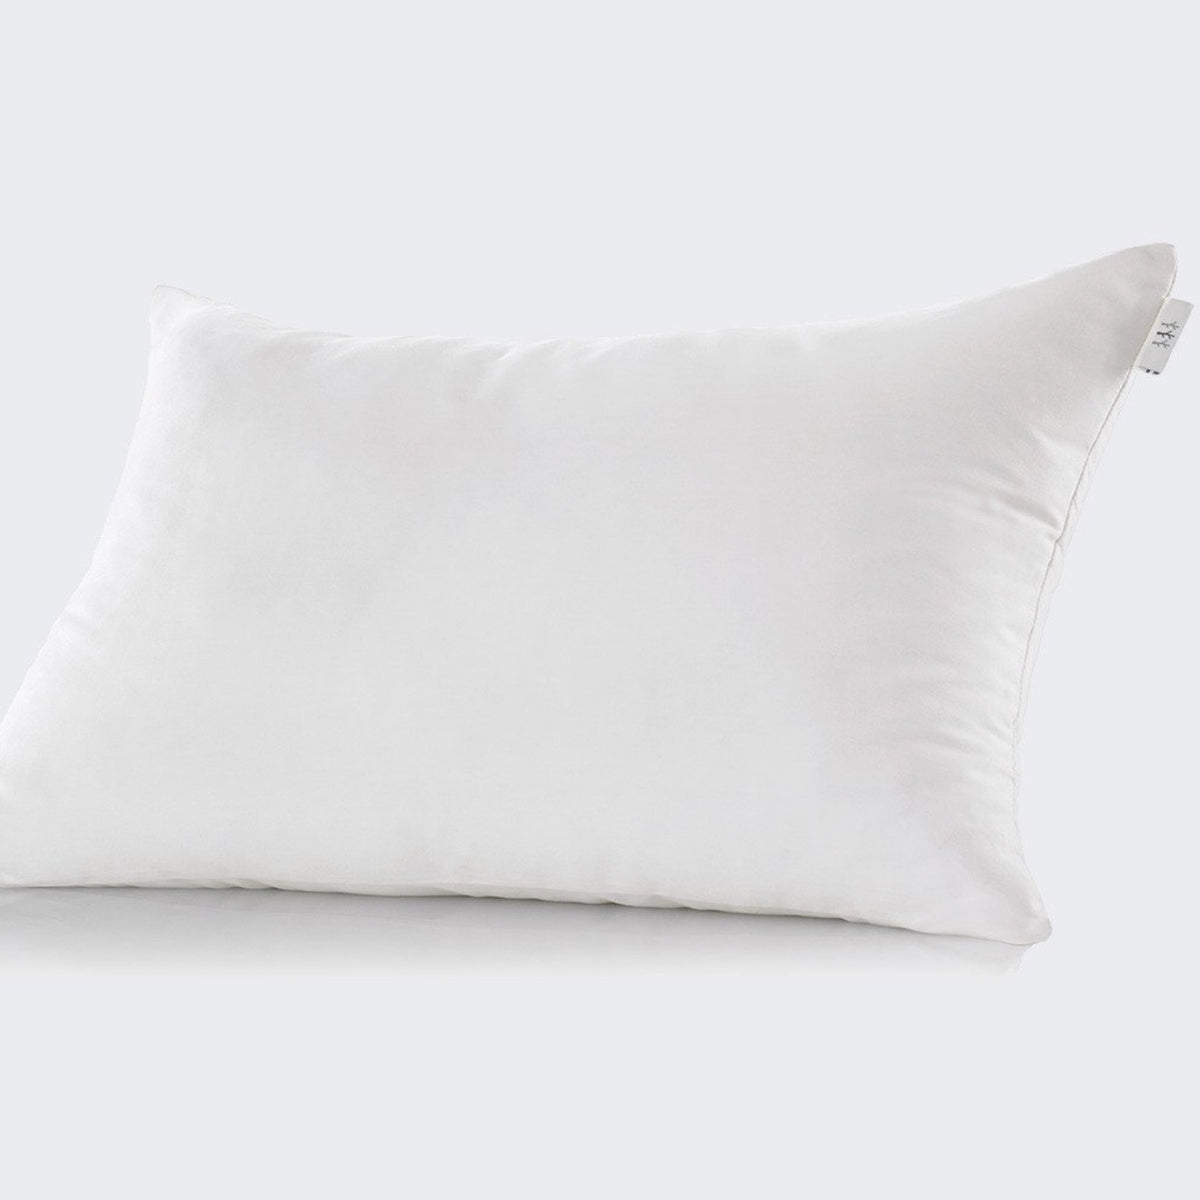 Organic Toddler Pillow